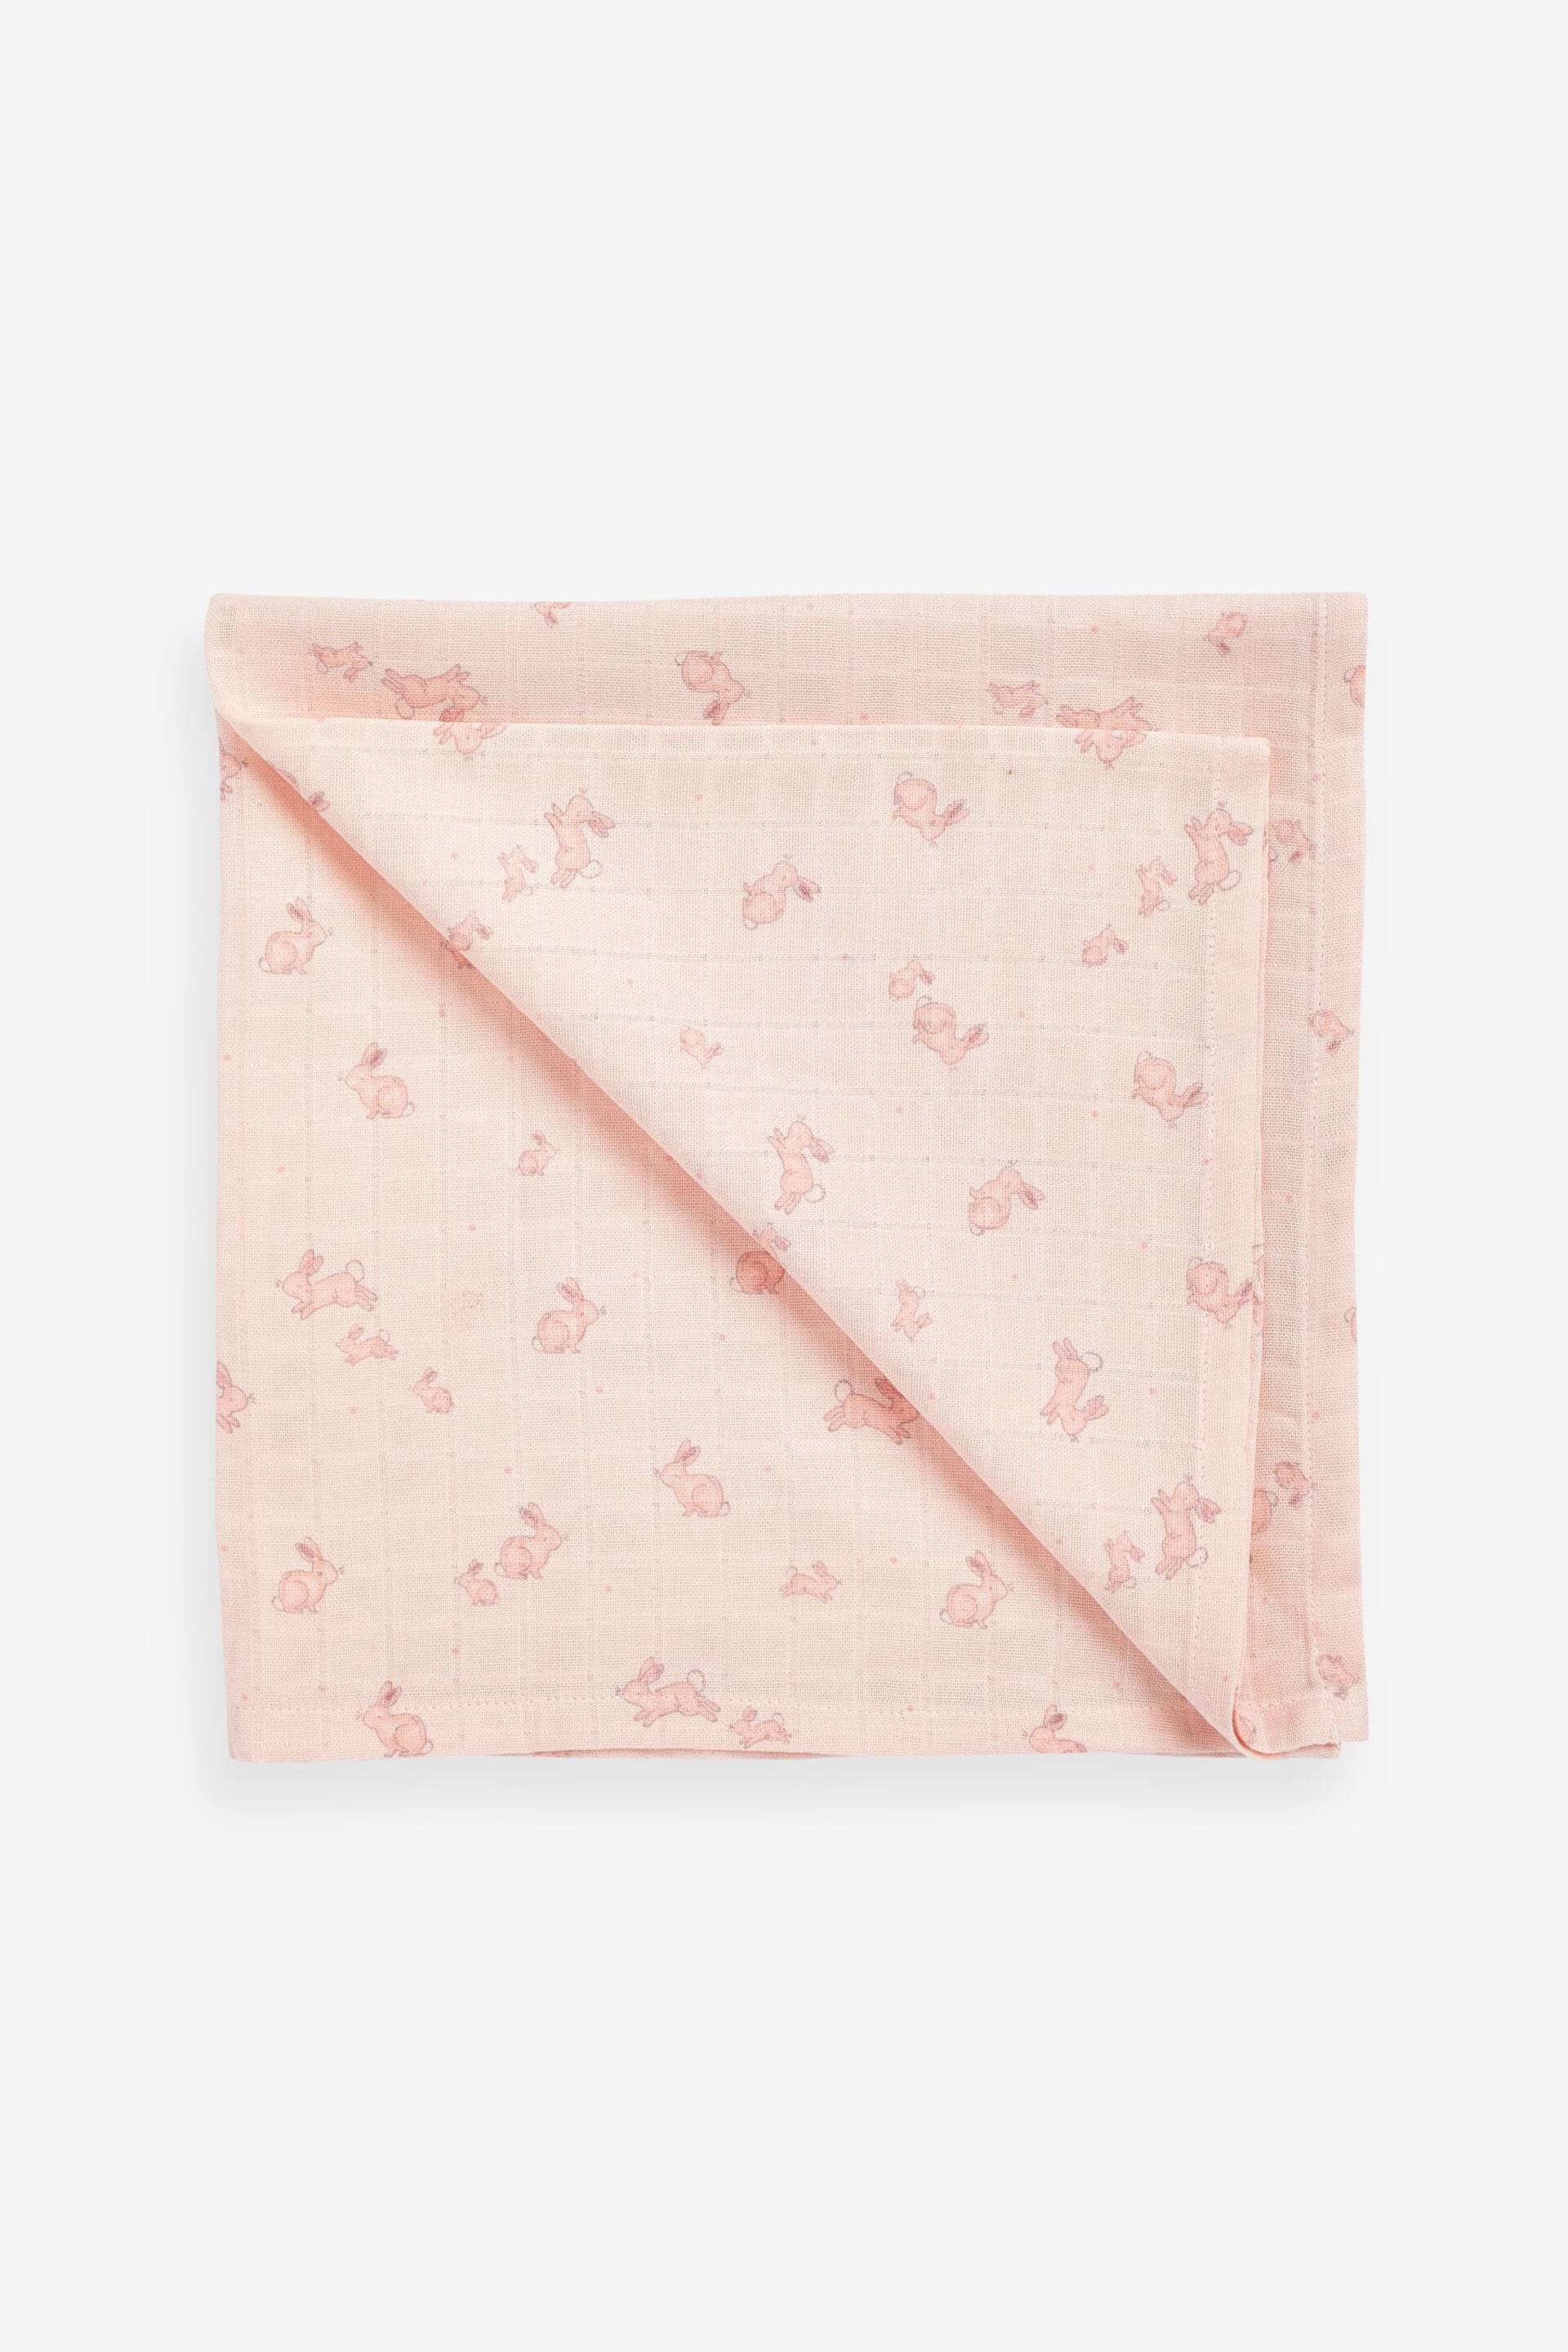 Pink Rabbit Baby Muslin Cloths 4 Packs - Image 5 of 6